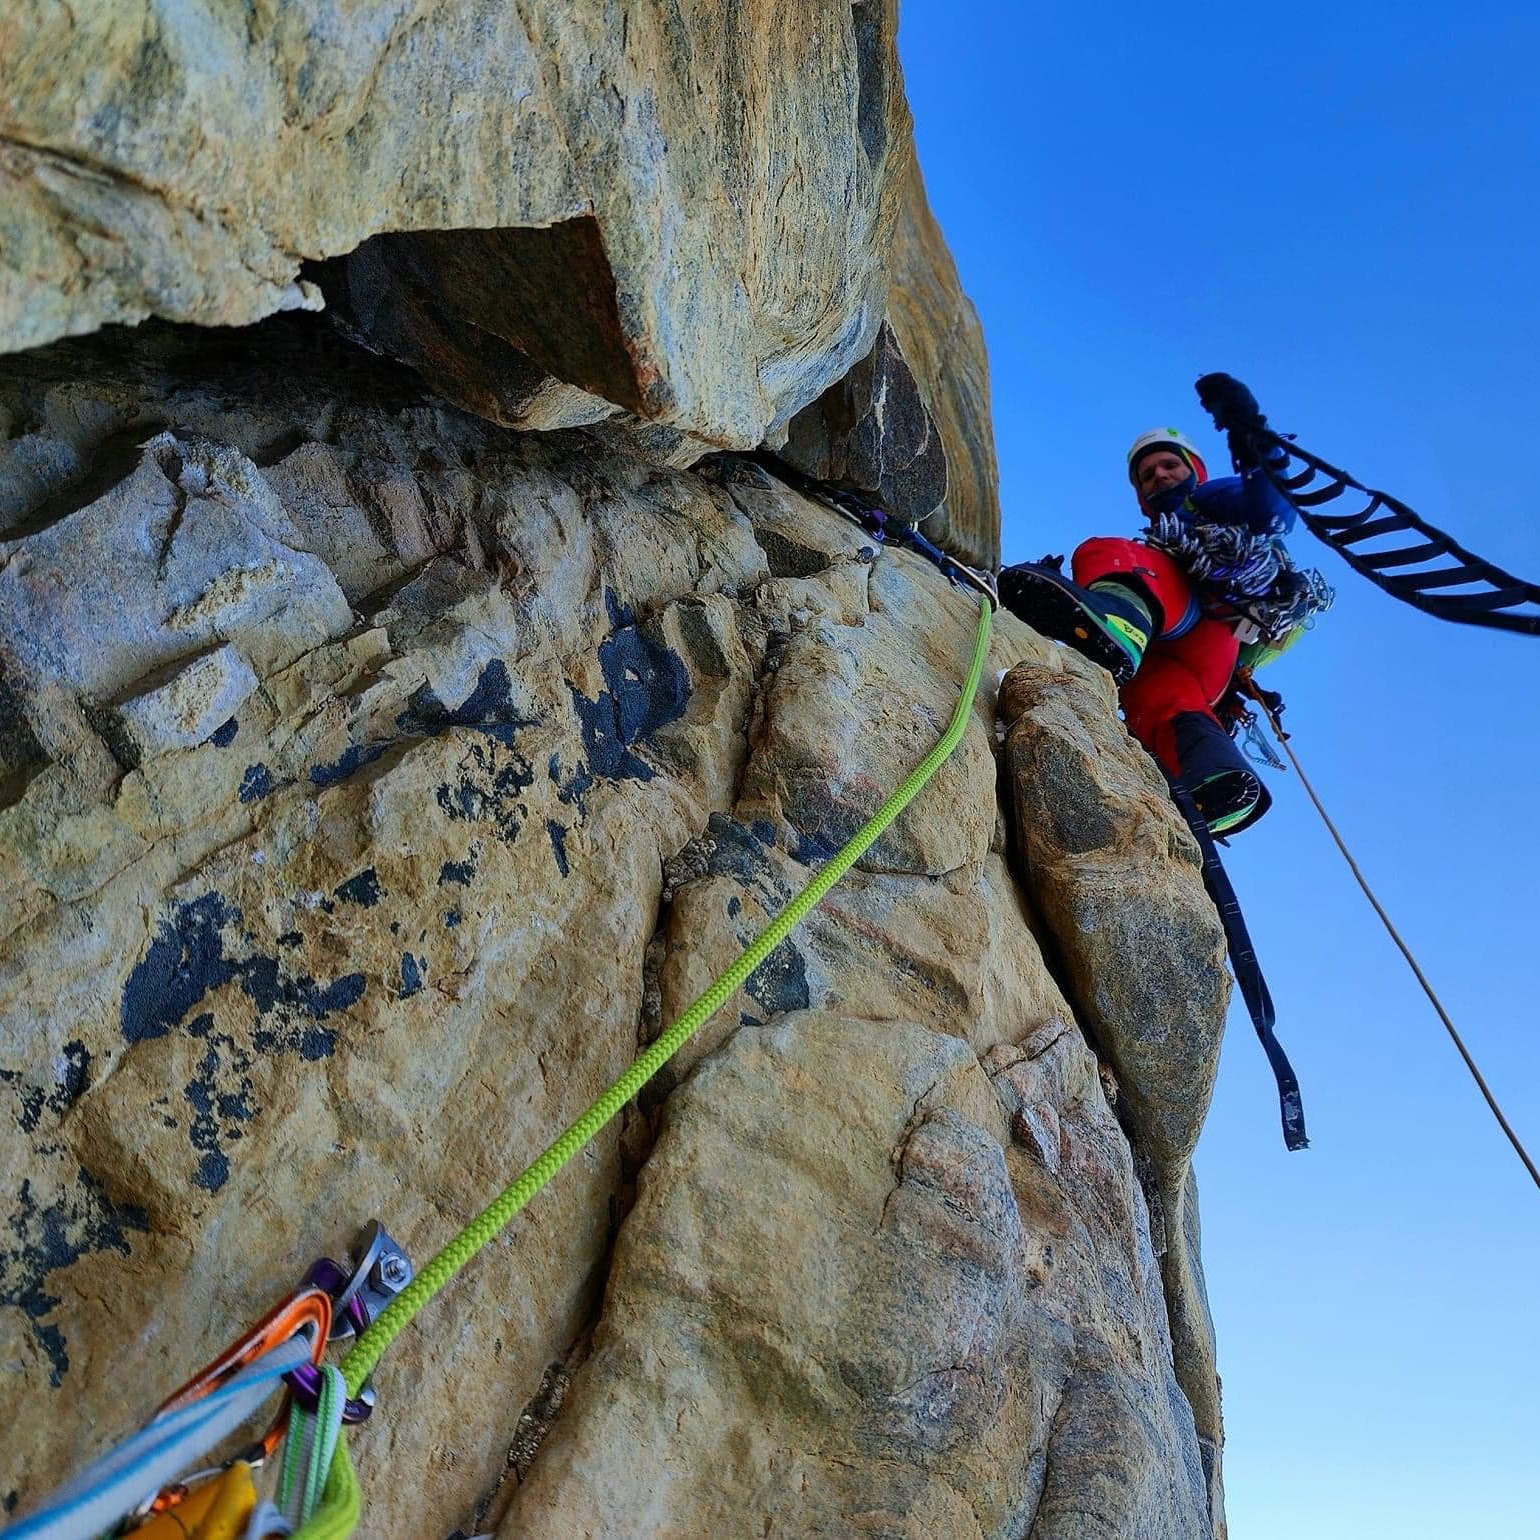 Climbing ropes